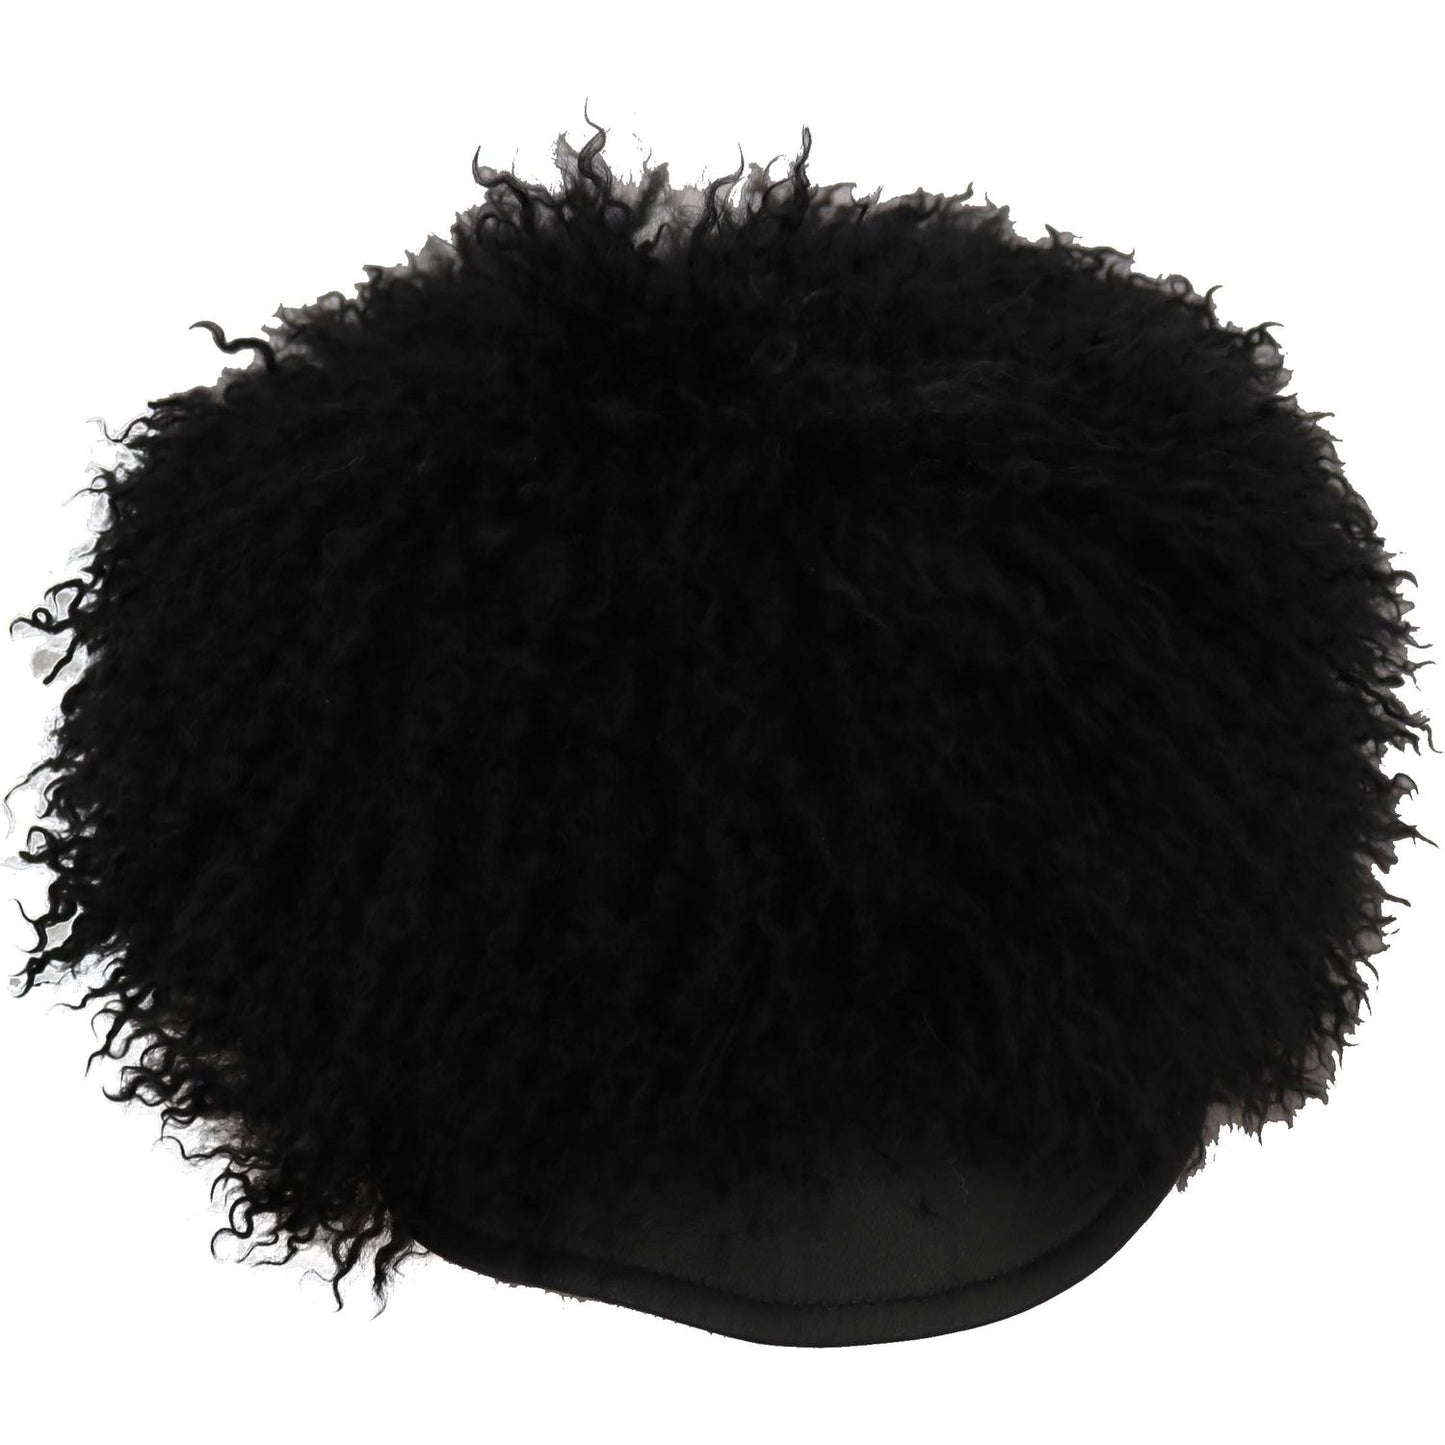 Dolce & Gabbana Black Tibet Lamb Fur Leather Gatsby Hat black-tibet-lamb-fur-leather-gatsby-hat Hat IMG_0189-1.jpg